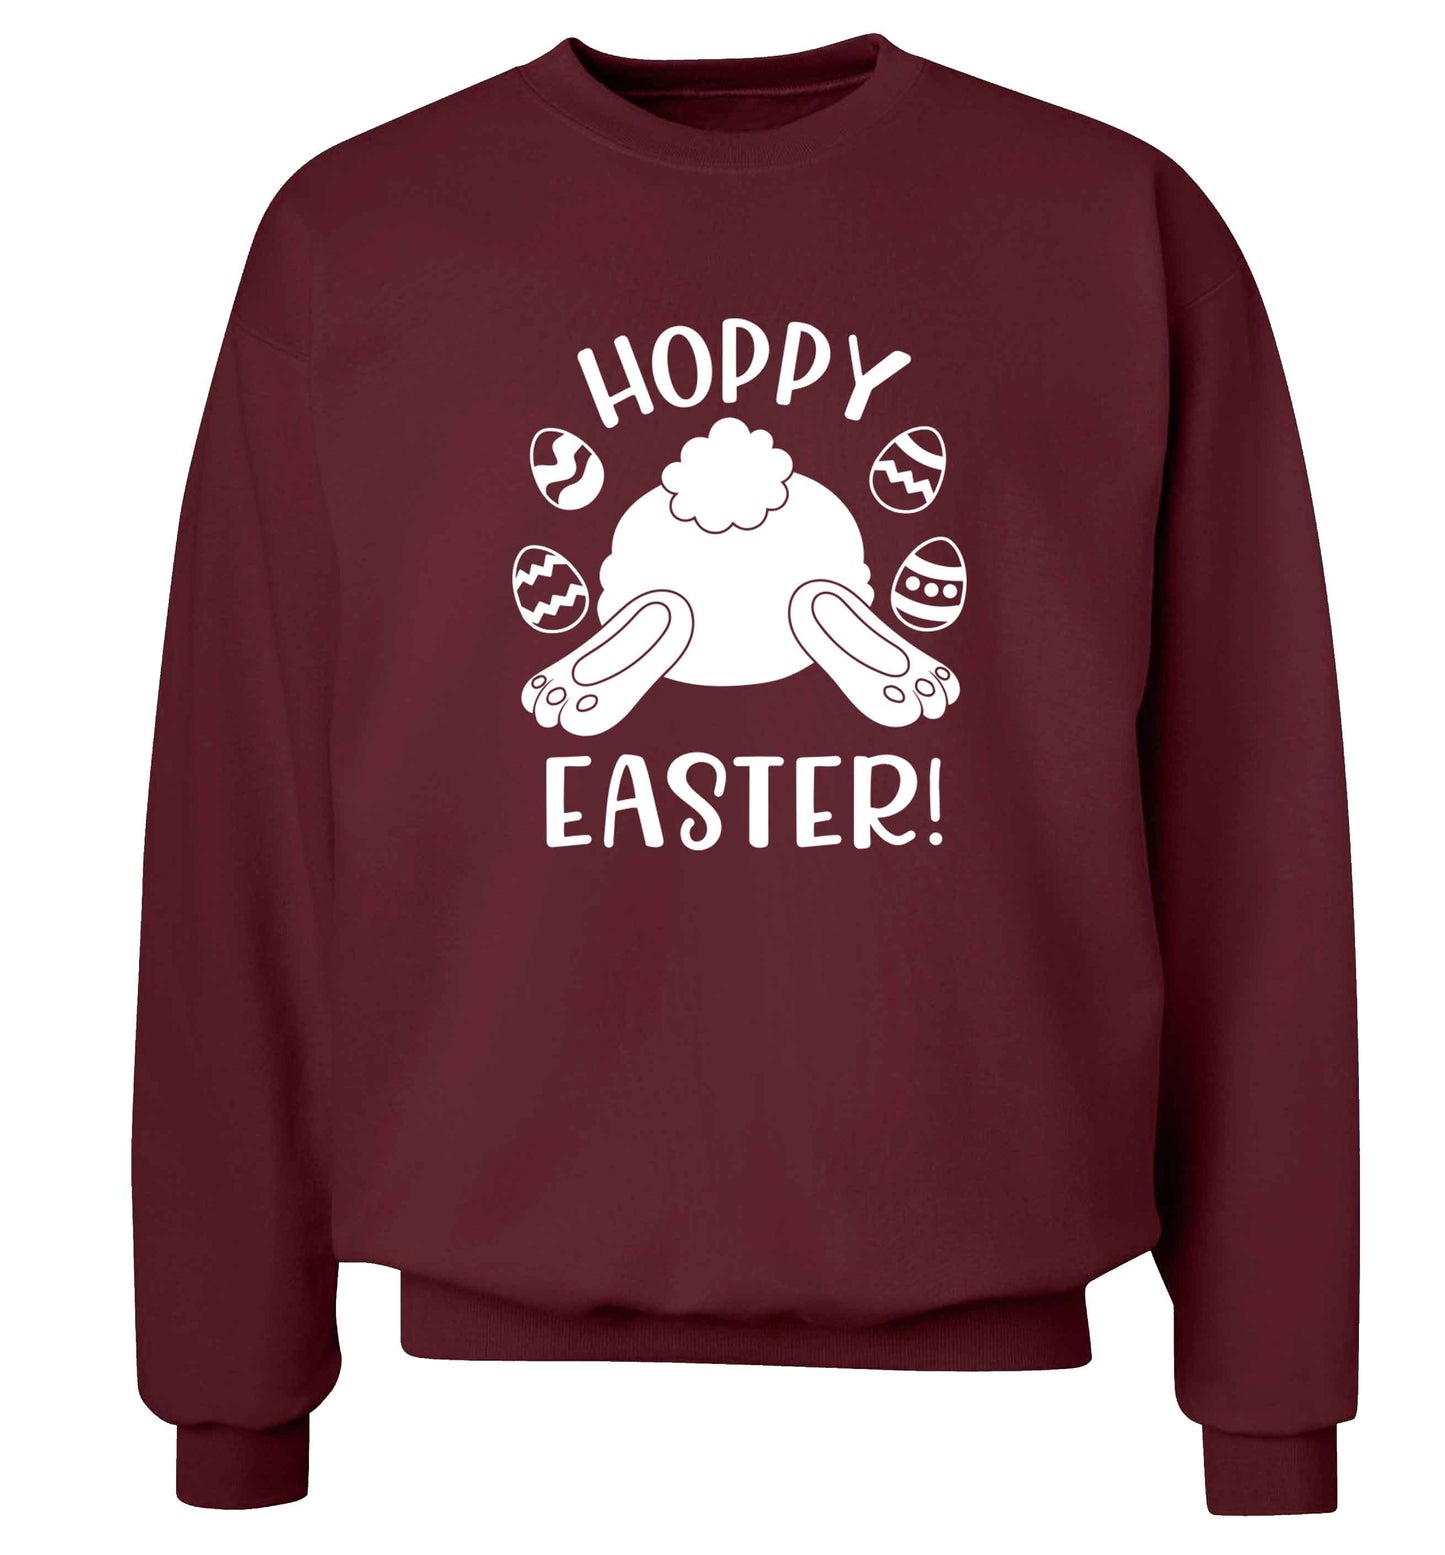 Hoppy Easter adult's unisex maroon sweater 2XL